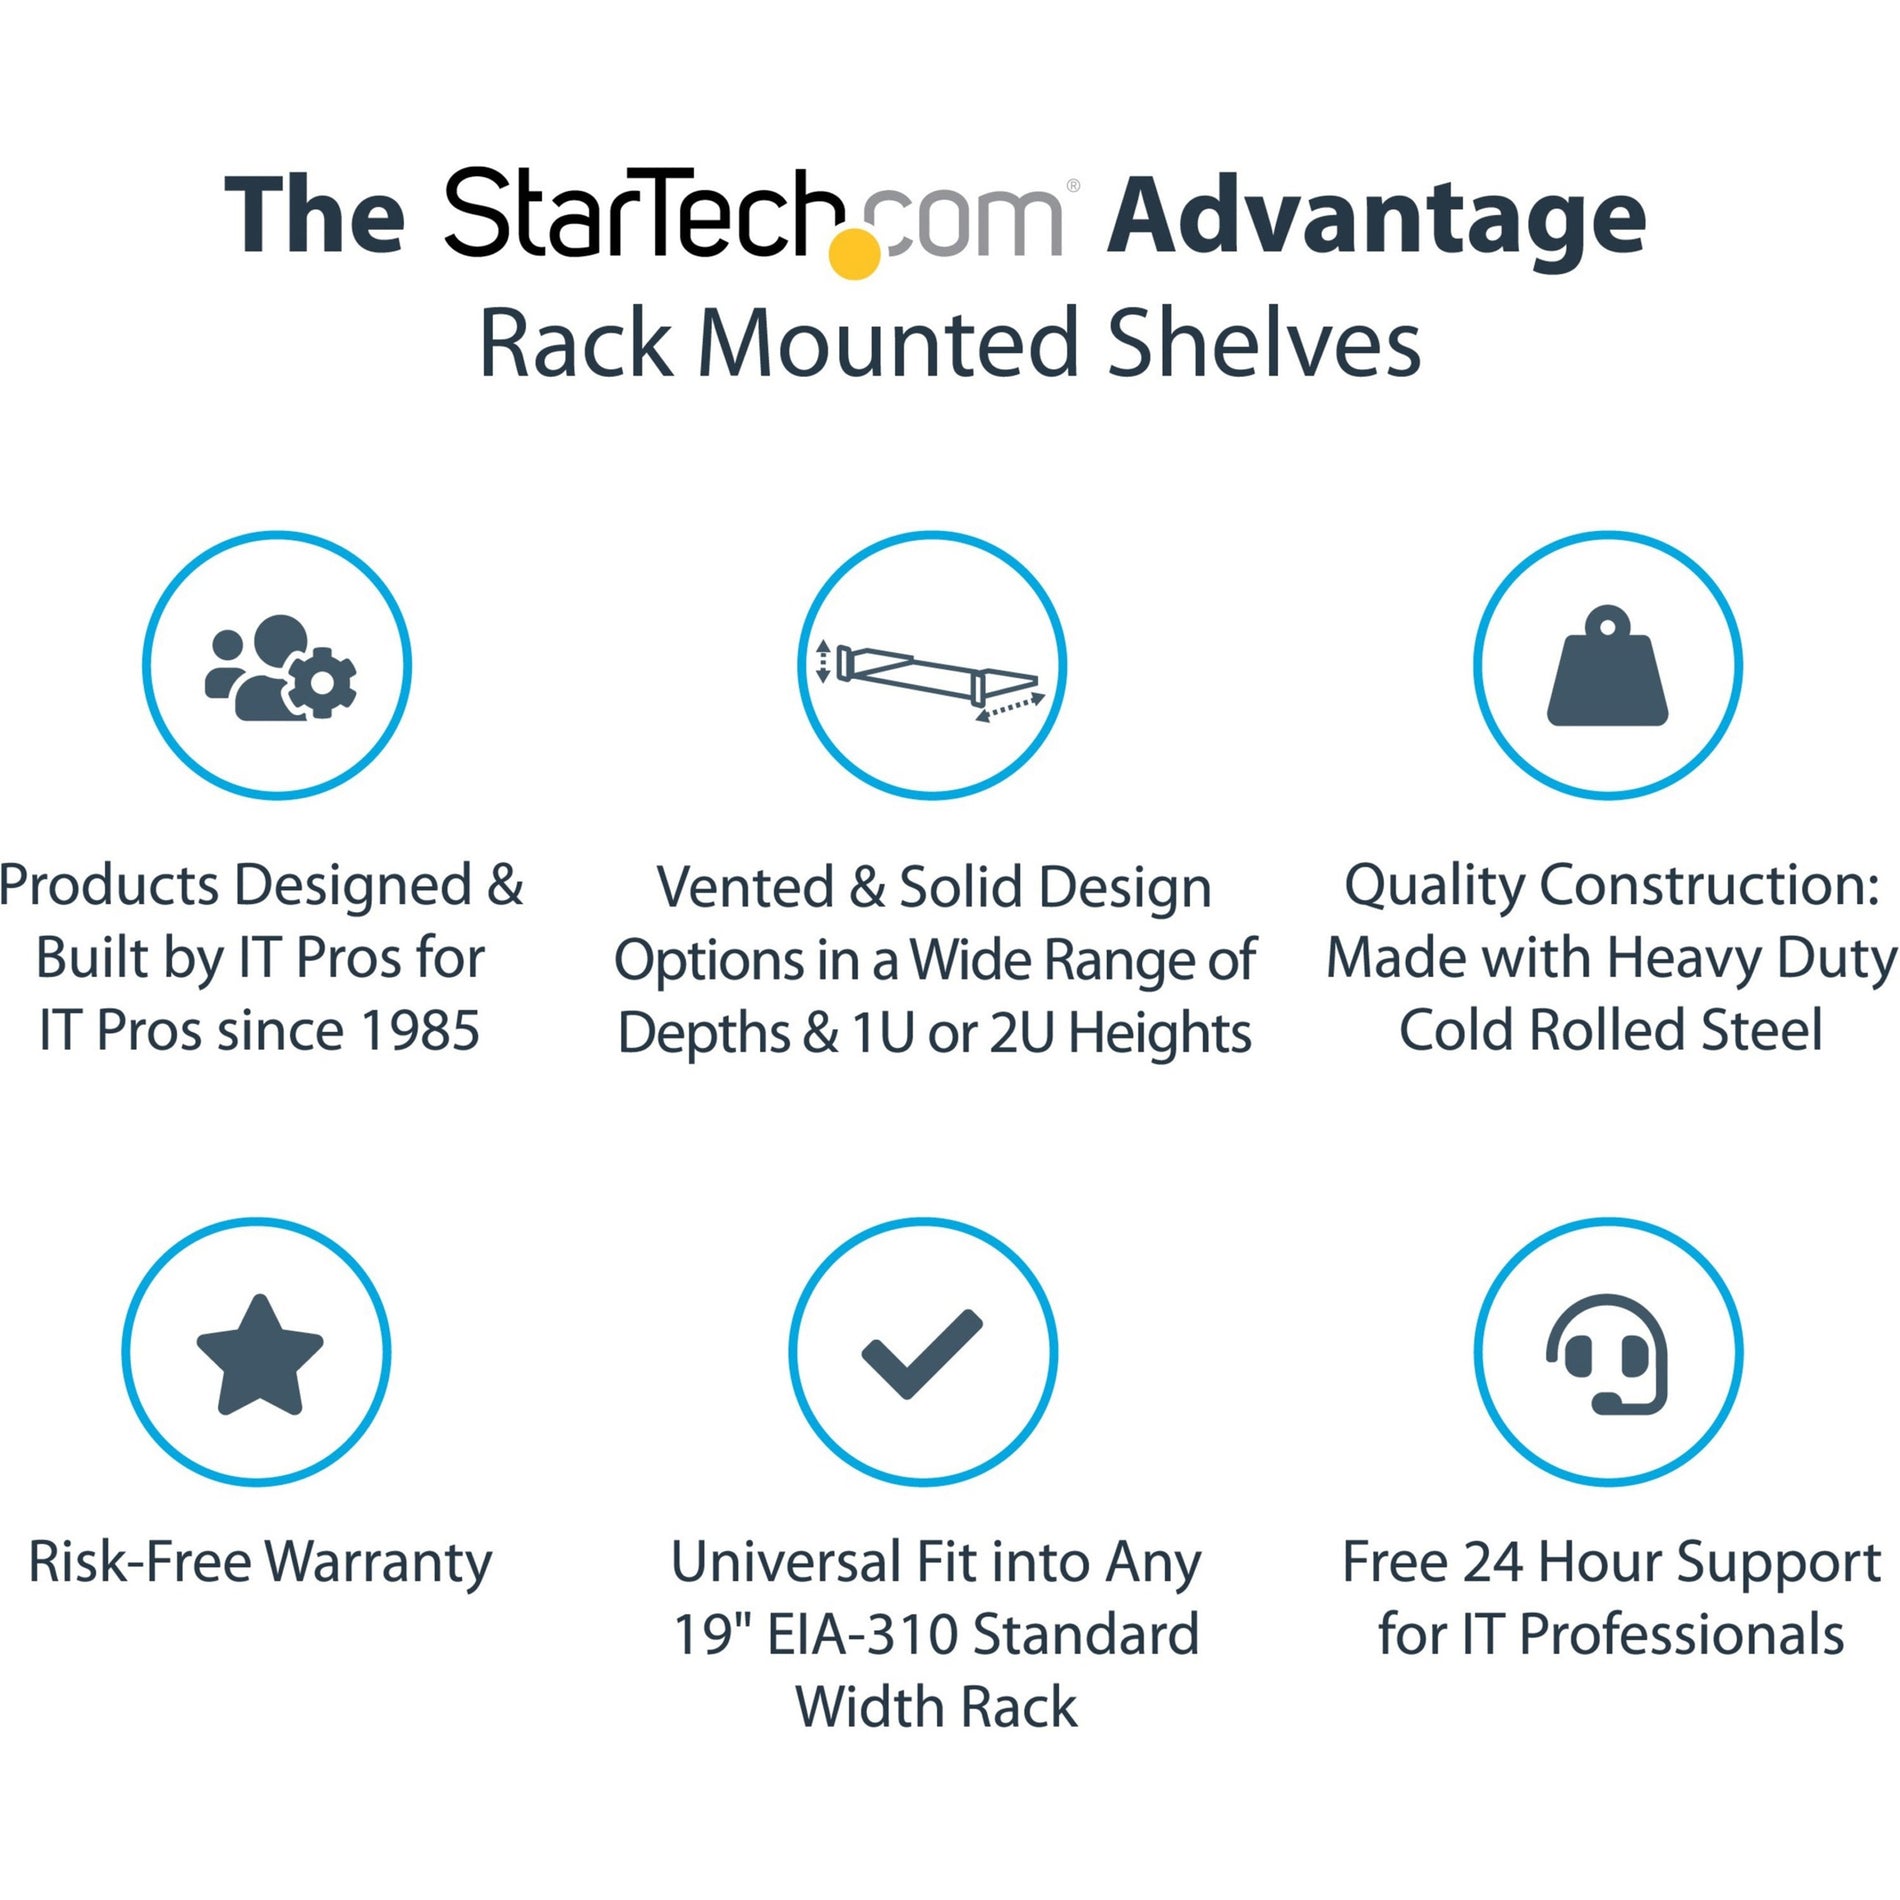 StarTech.com CABSHELF22 2U 22in Depth Fixed Rack Mount Shelf - 50lbs / 22kg, Front Mount Design